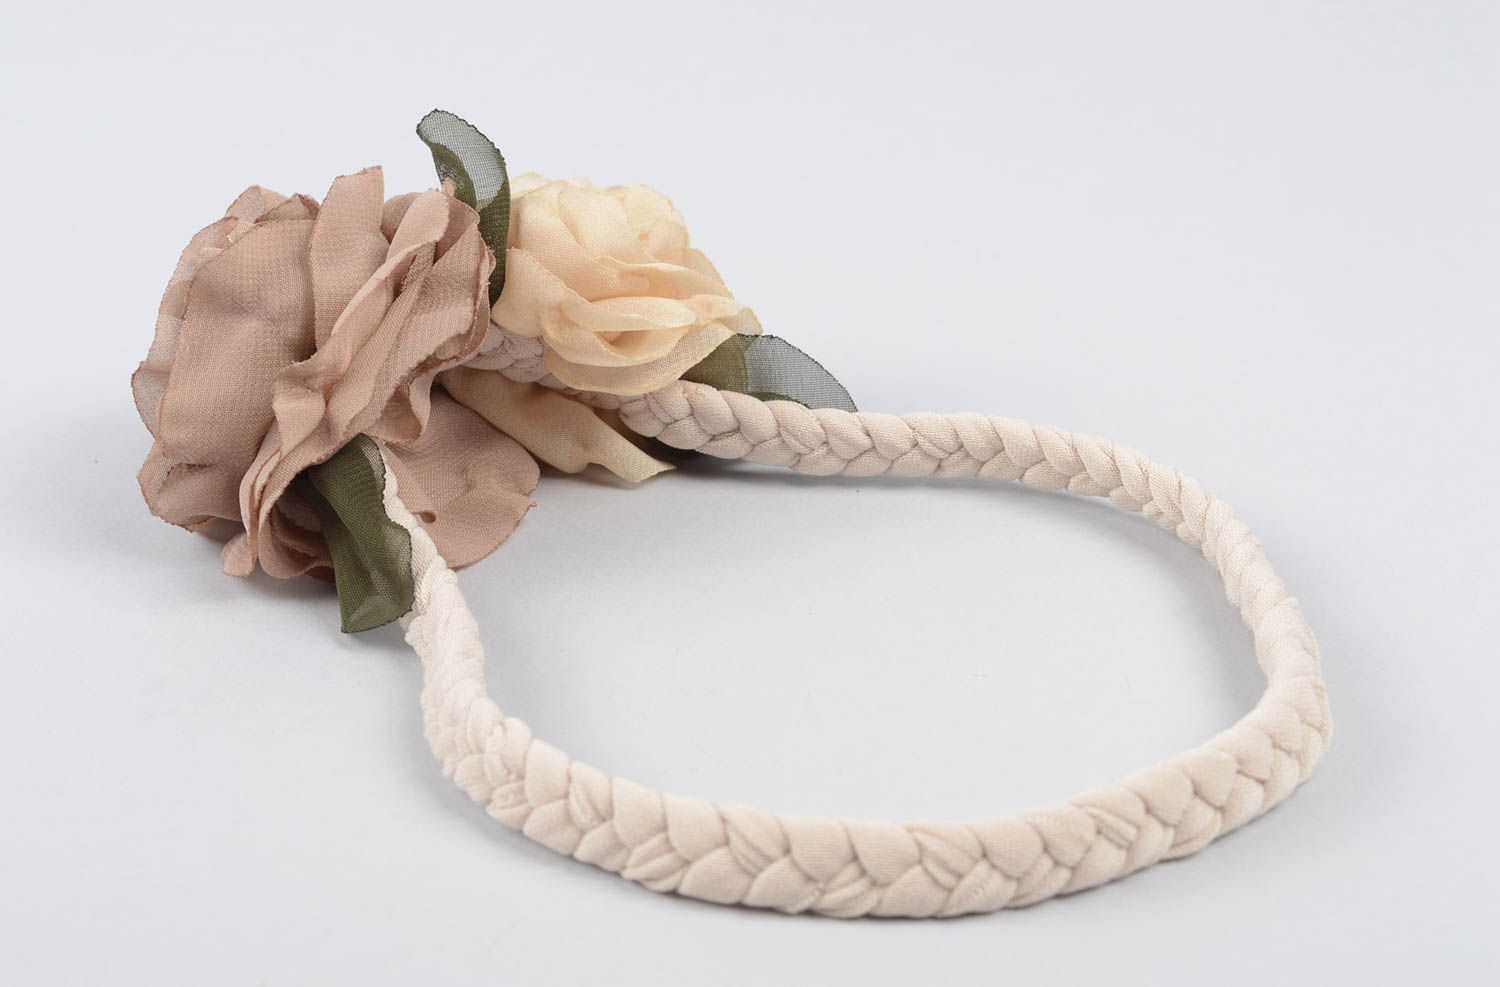 Handmade flower headband stylish hair ornaments hair style ideas gifts for her photo 1